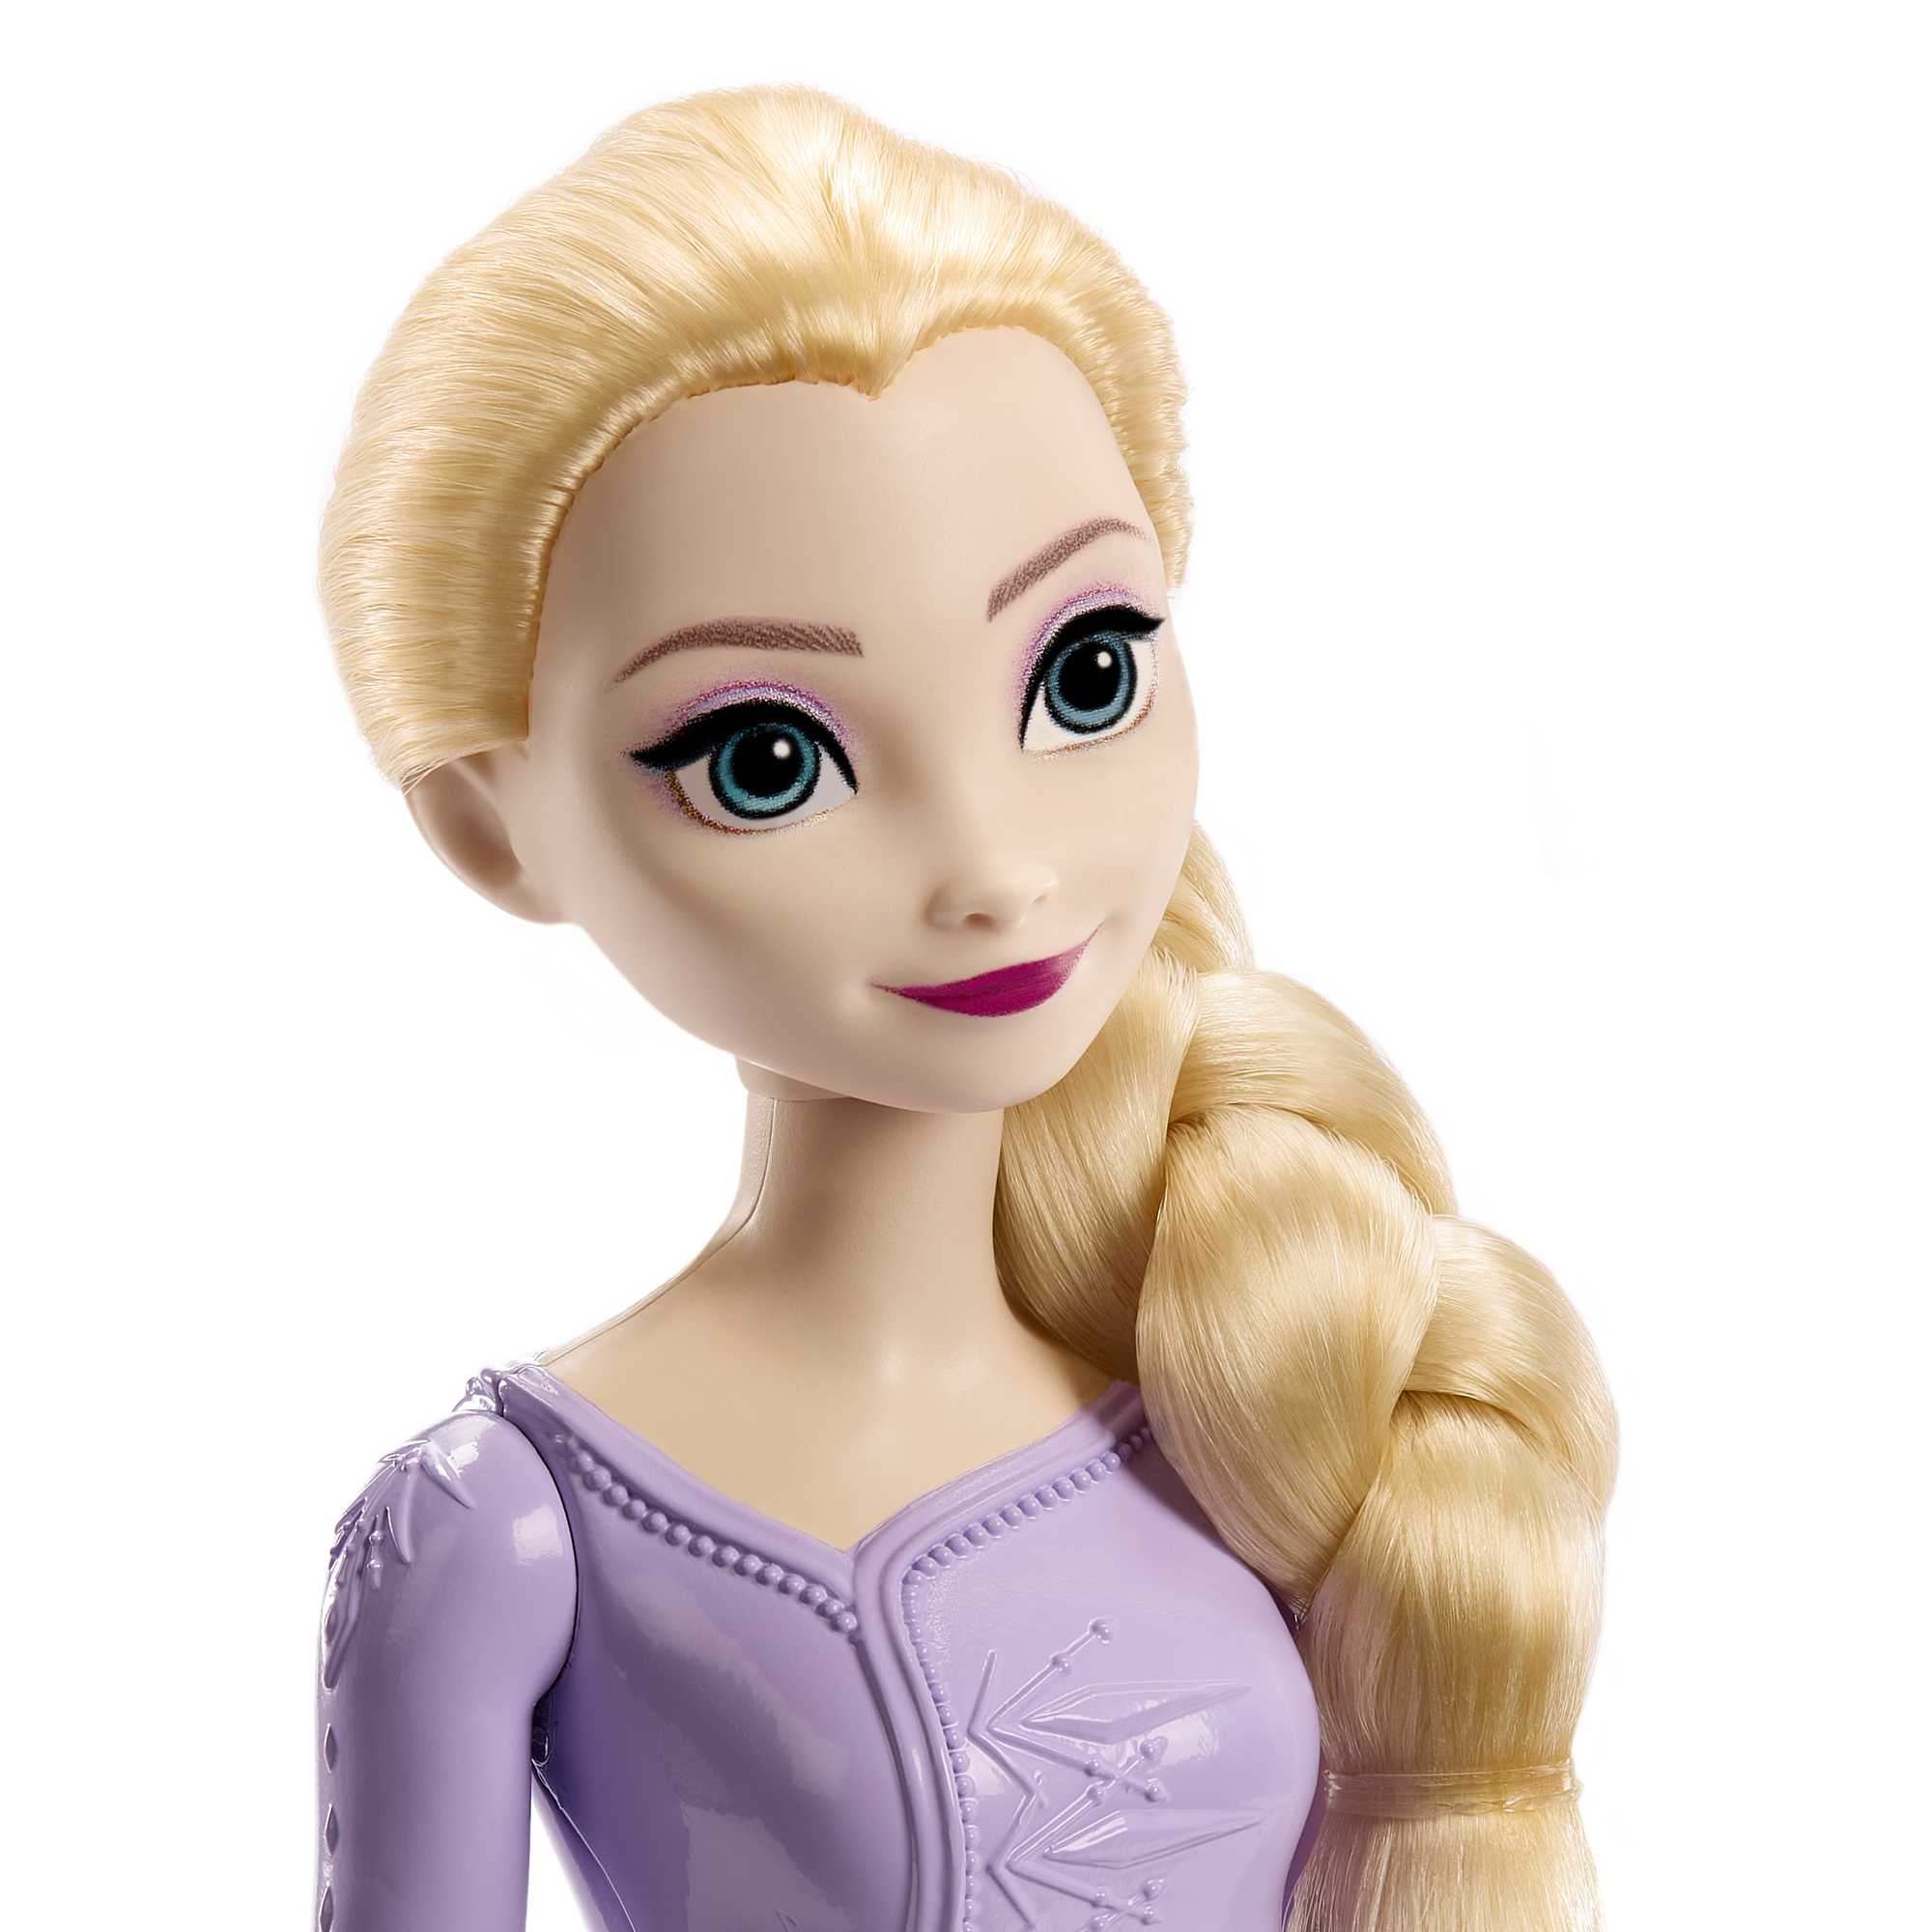 Disney Frozen Toys, Elsa Fashion Doll and Olaf Figure | Mattel